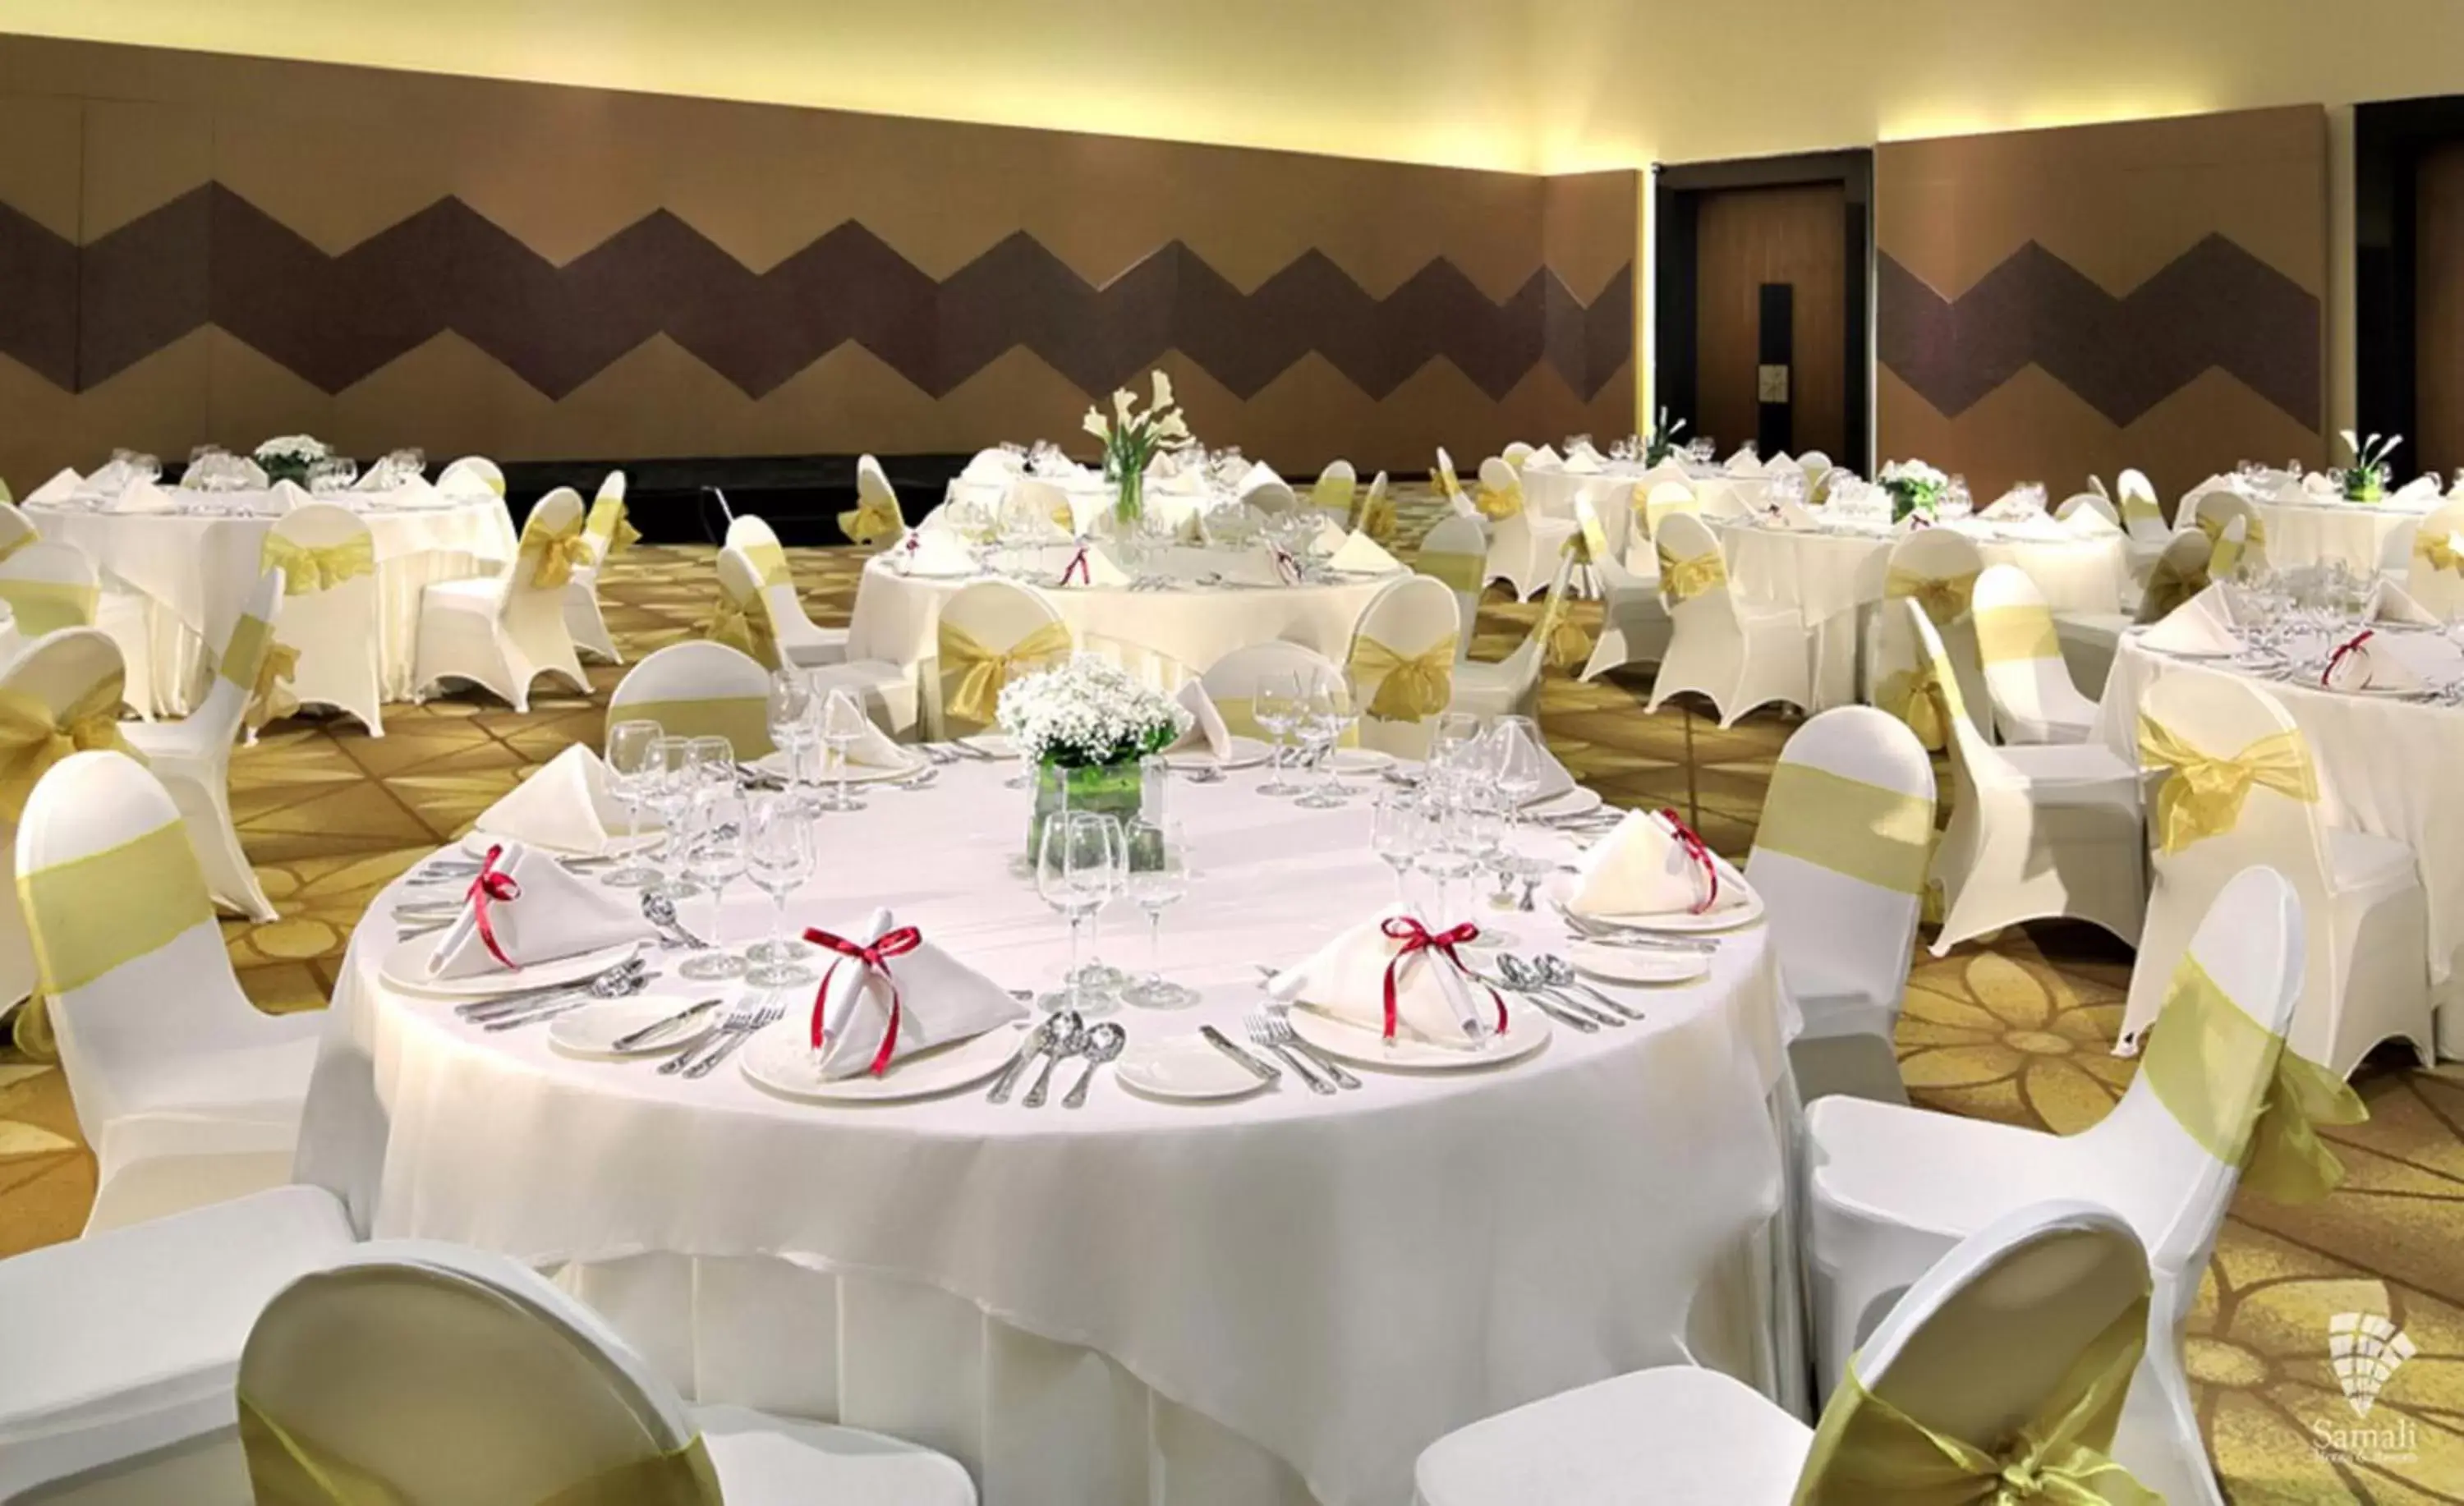 Banquet/Function facilities, Banquet Facilities in d'primahotel Tangerang